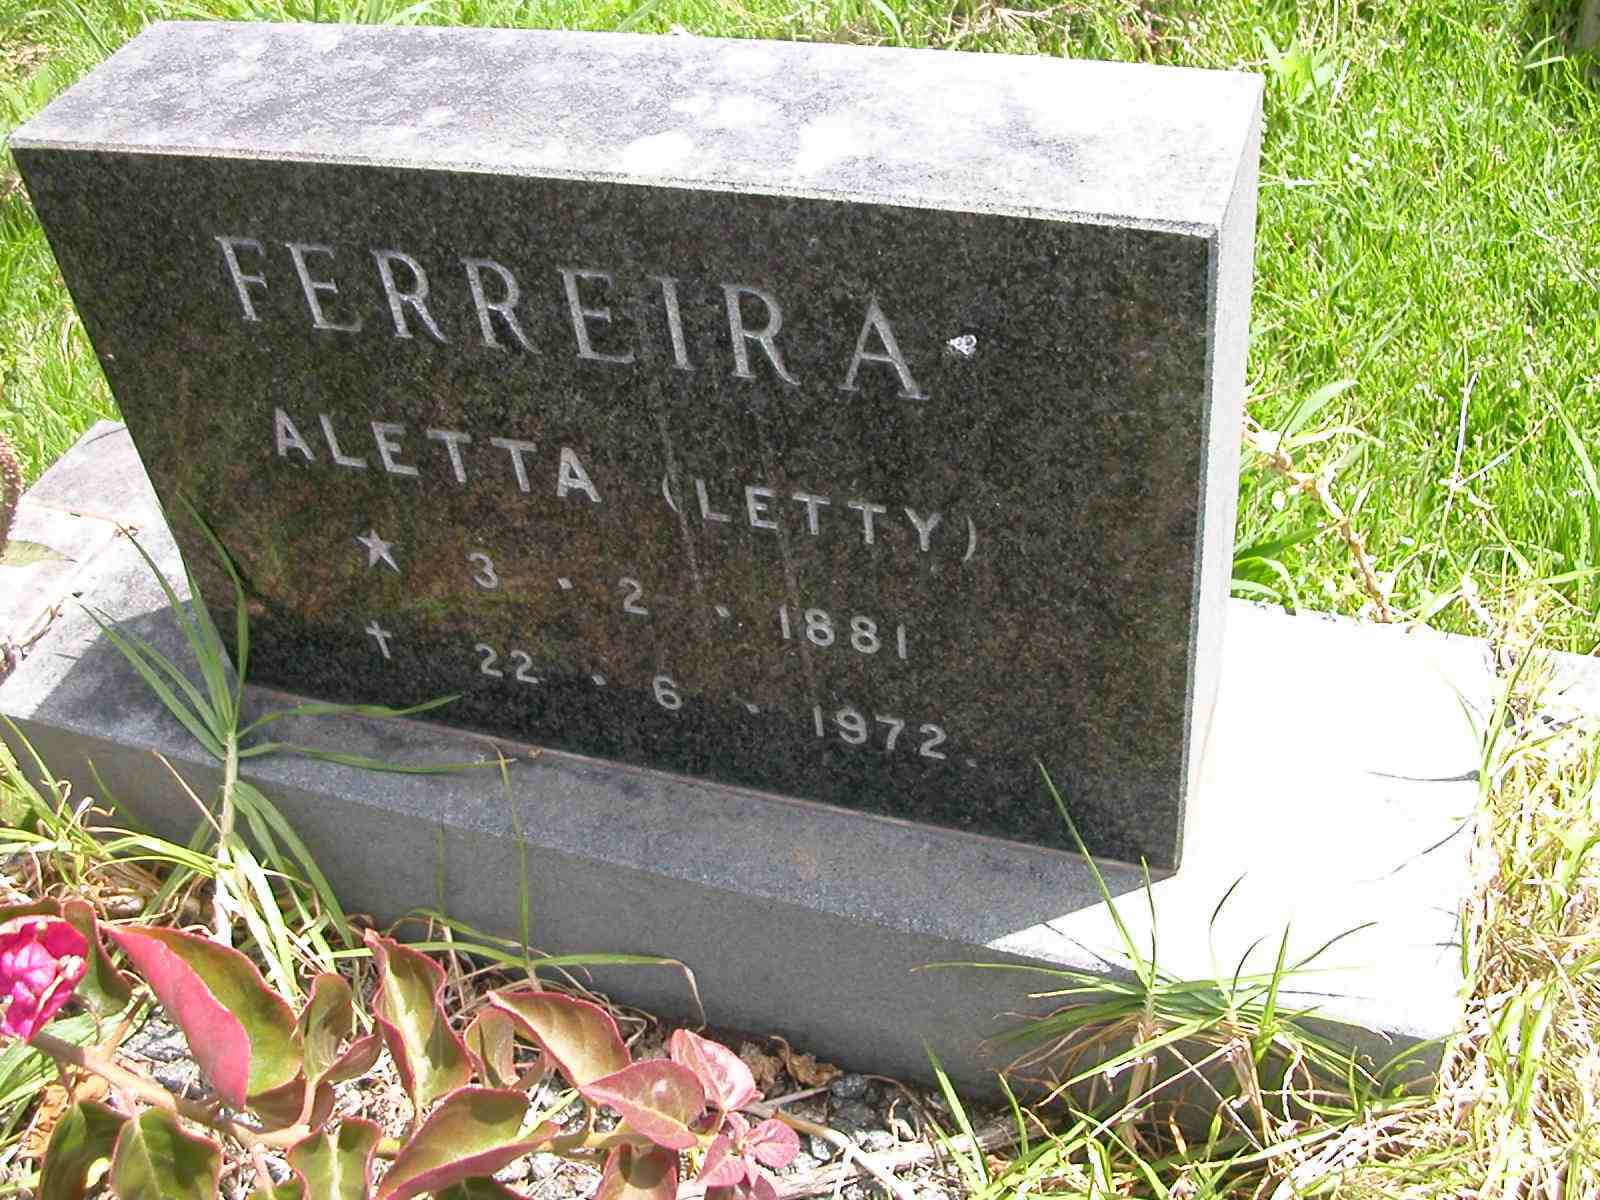 FERREIRA Aletta 1881-1972